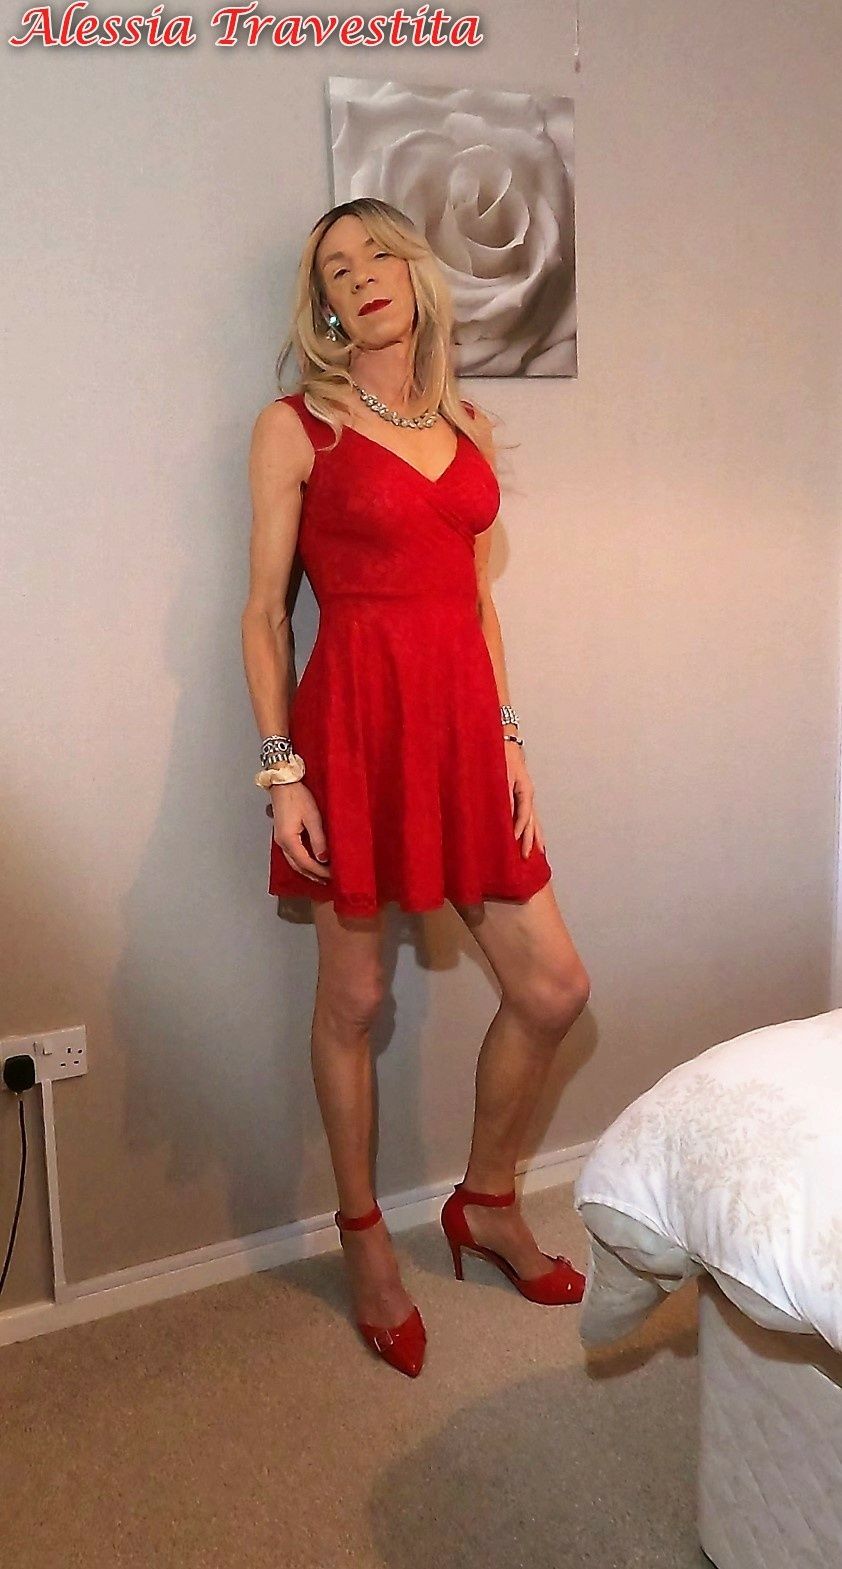 65 Alessia Travestita in Flirty Red Dress #20